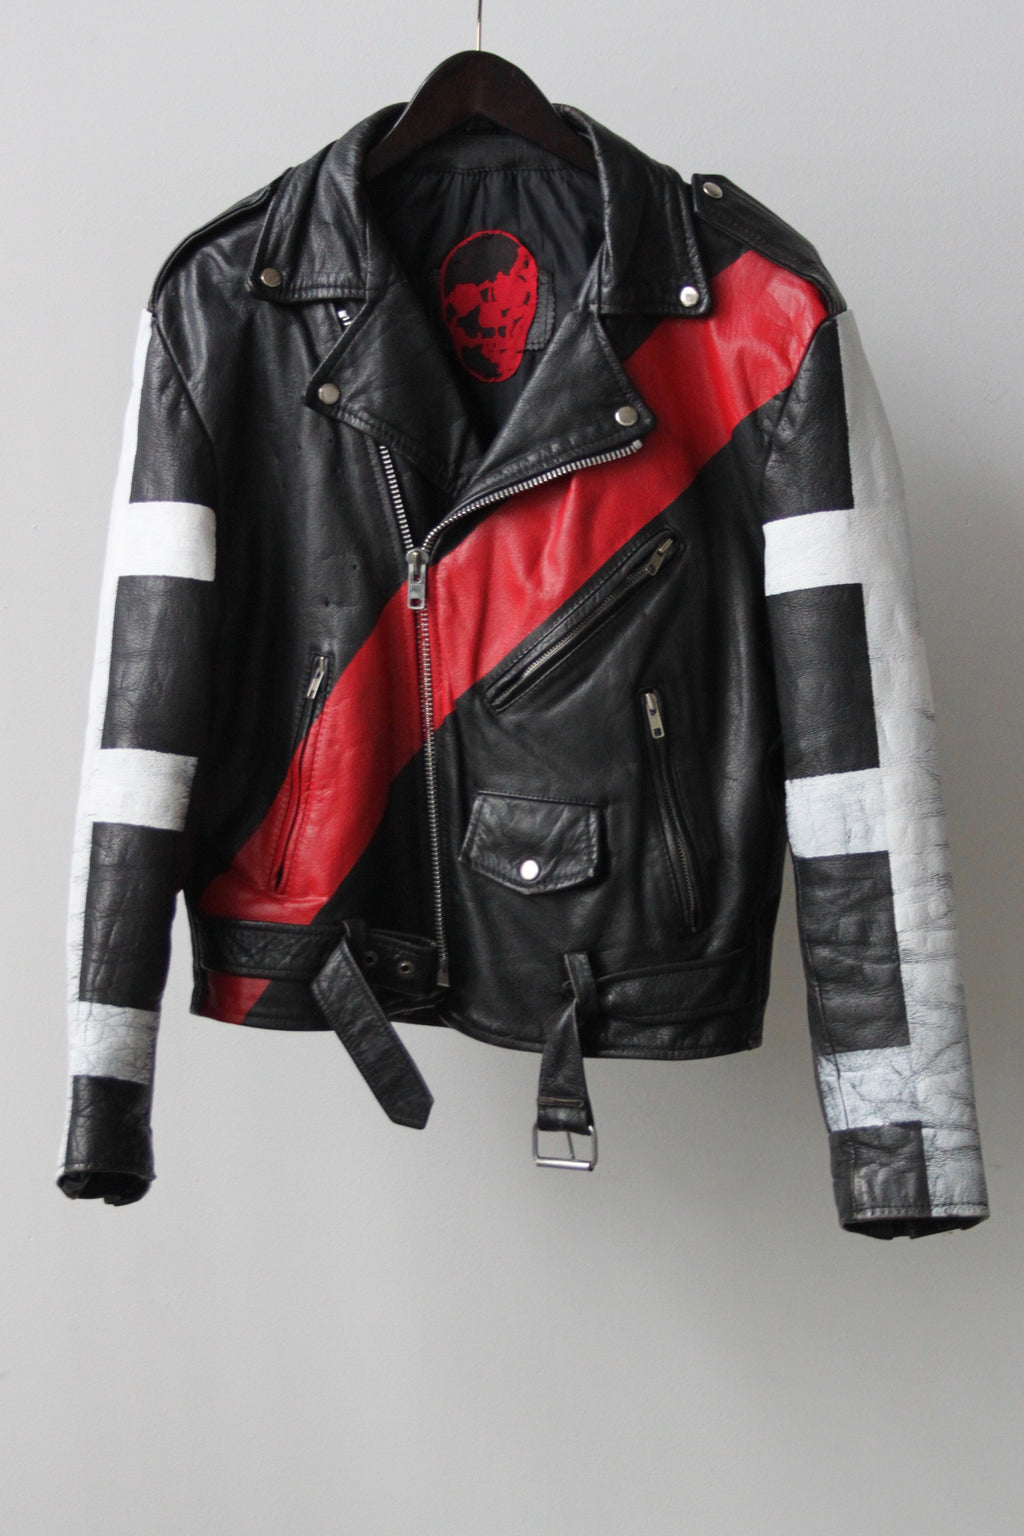 WSL Customized Vintage Leather "Zipper Club" Motorcycle Jacket